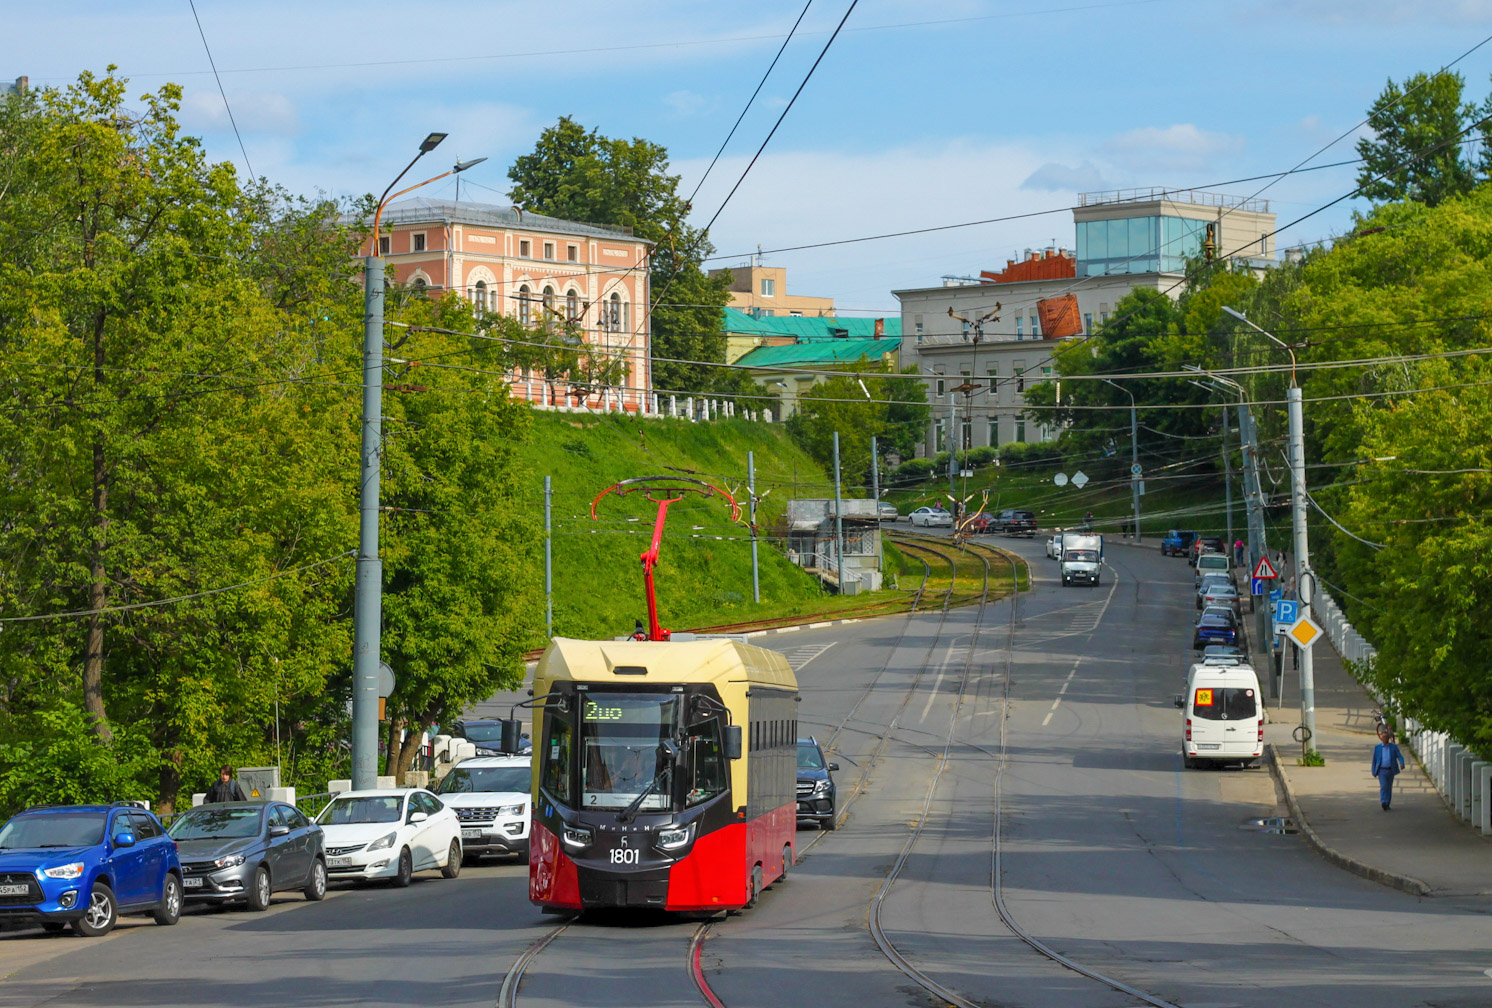 Nyizsnij Novgorod, BKM T811 "MiNiN" — 1801; Nyizsnij Novgorod — Tram lines